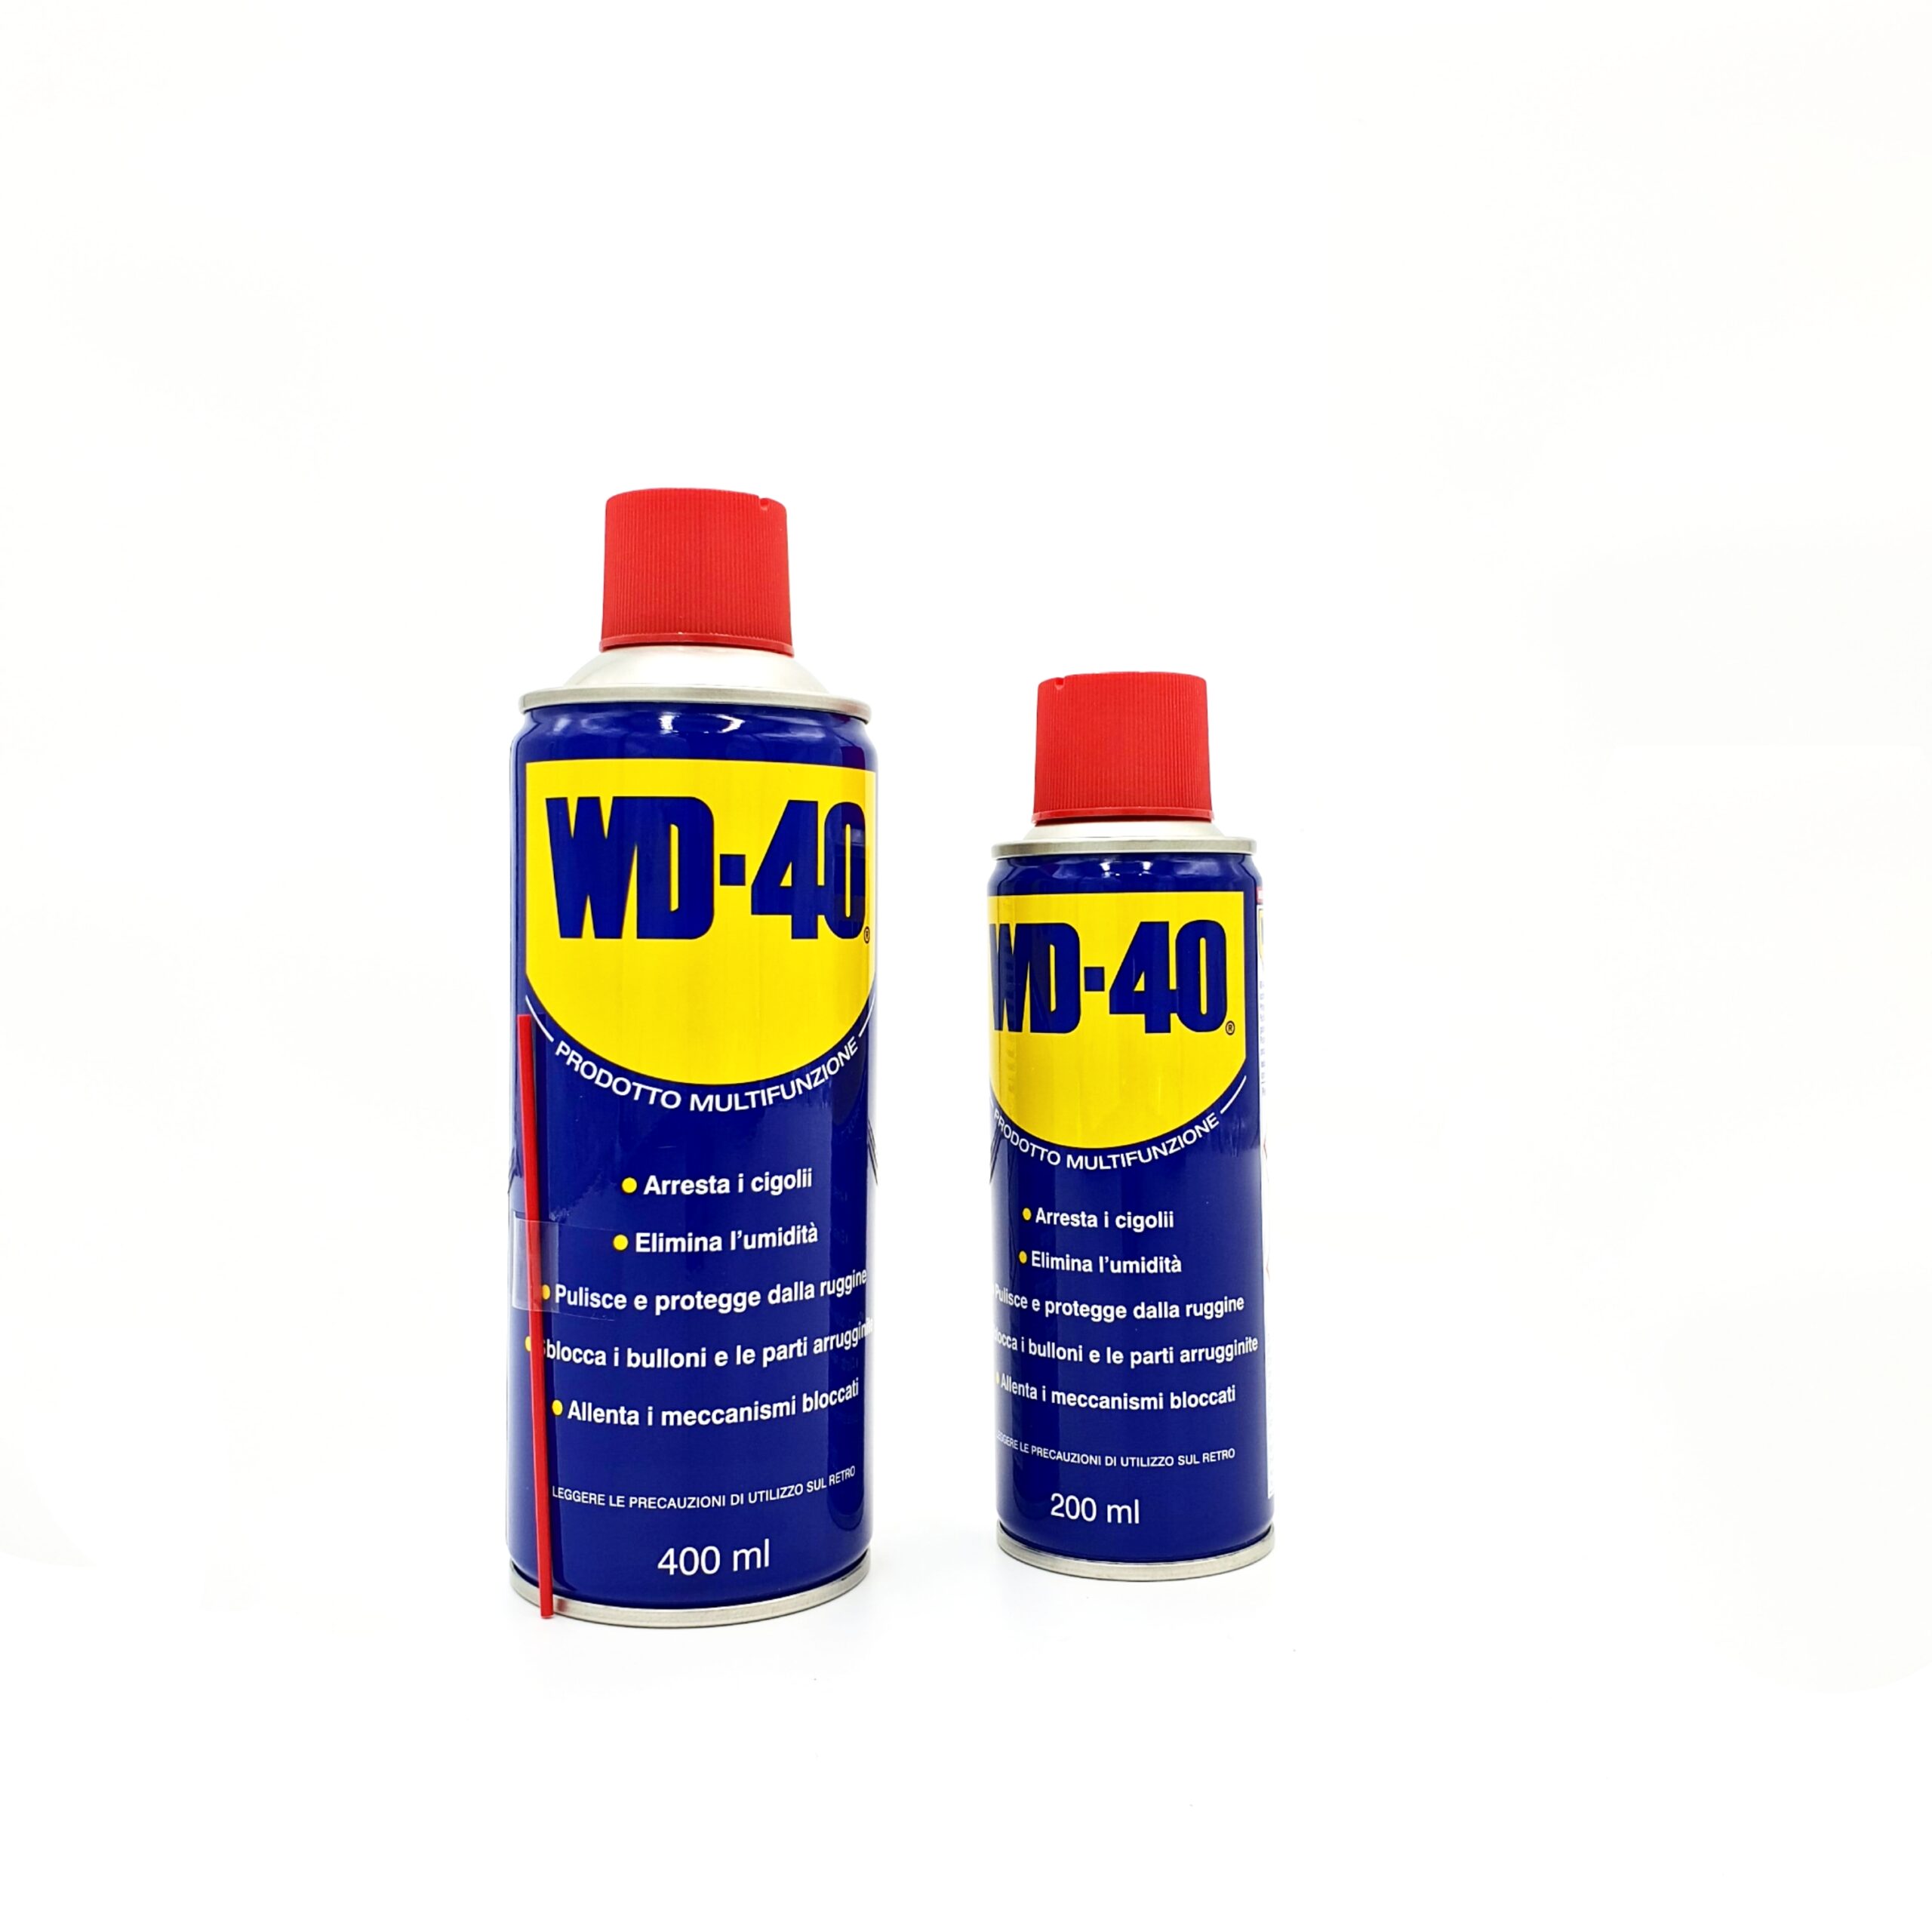 Detergente spay pulisci contatti elettrici WD-40 400 ml